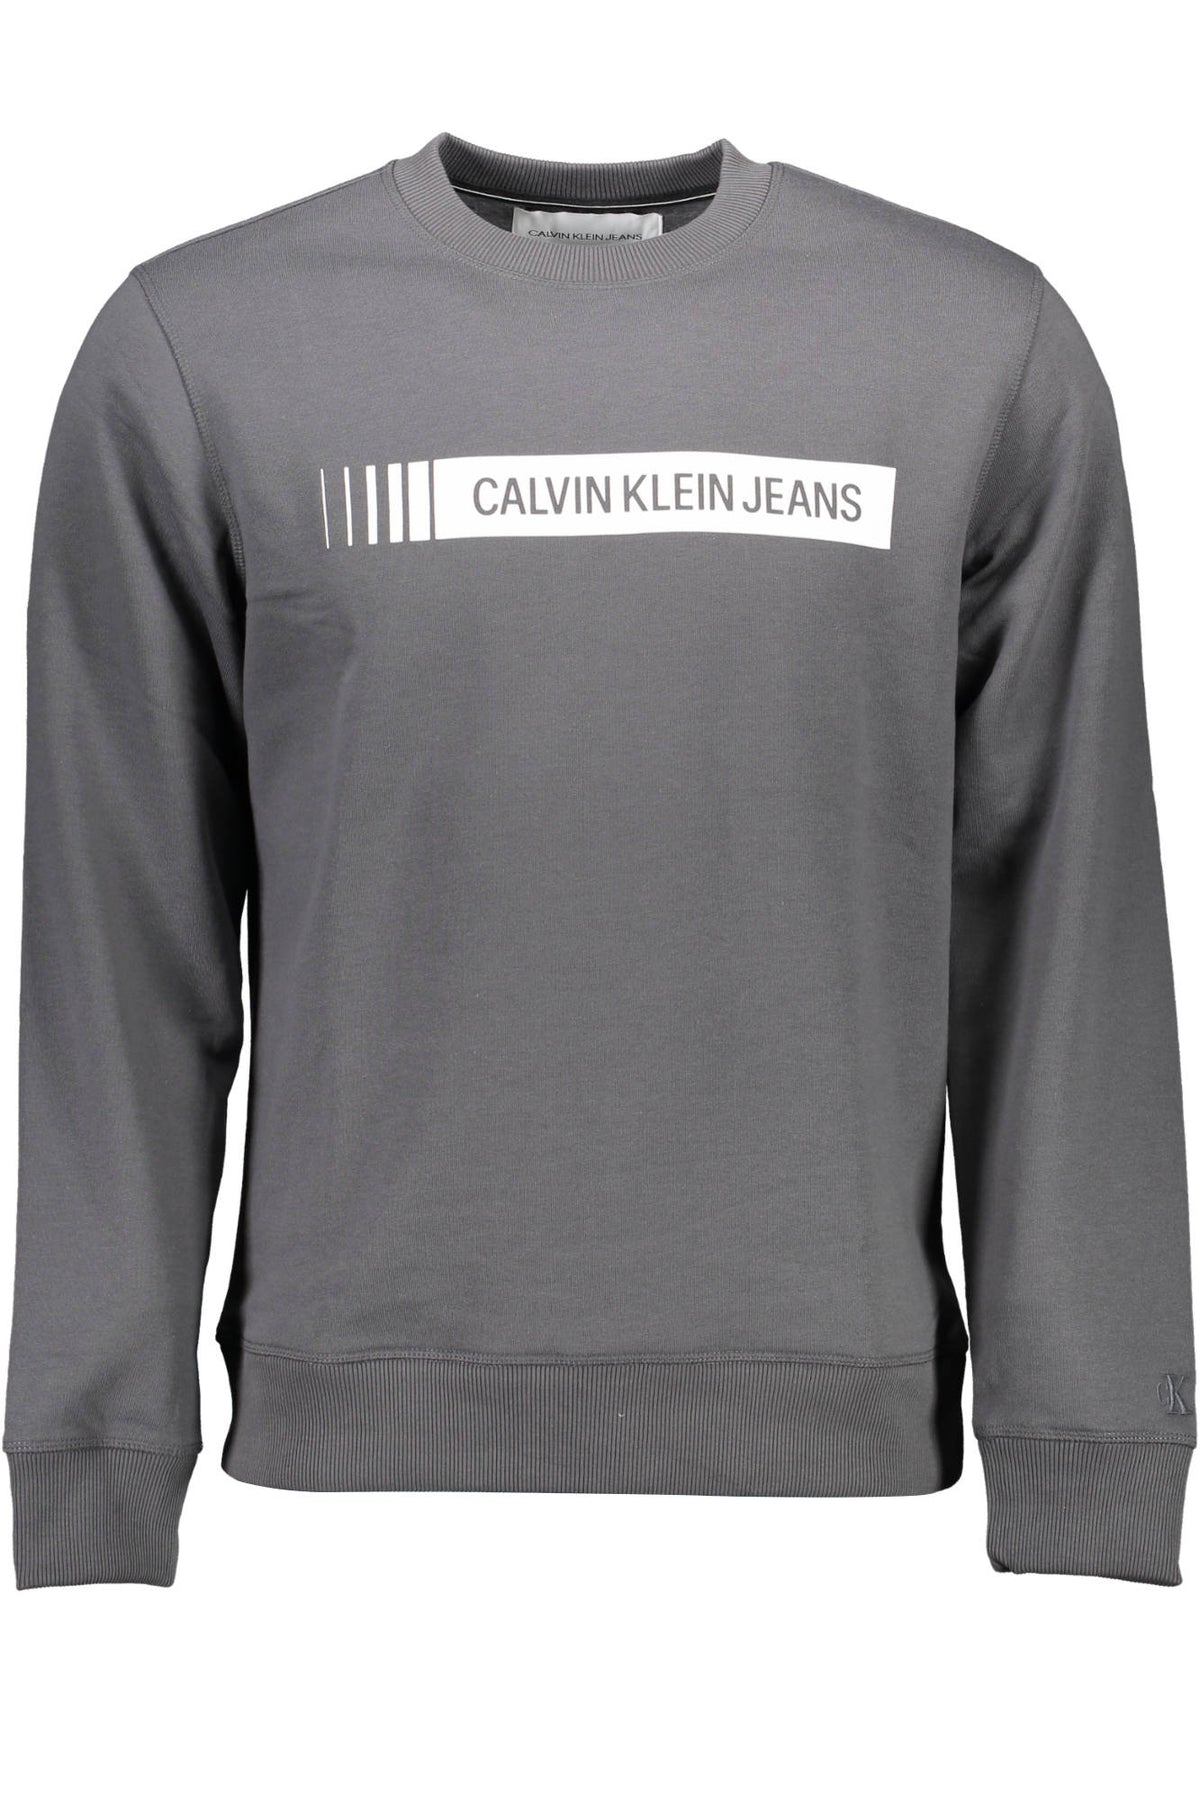 CALVIN KLEIN Herren Pullover Sweatshirt Sweater Pulli